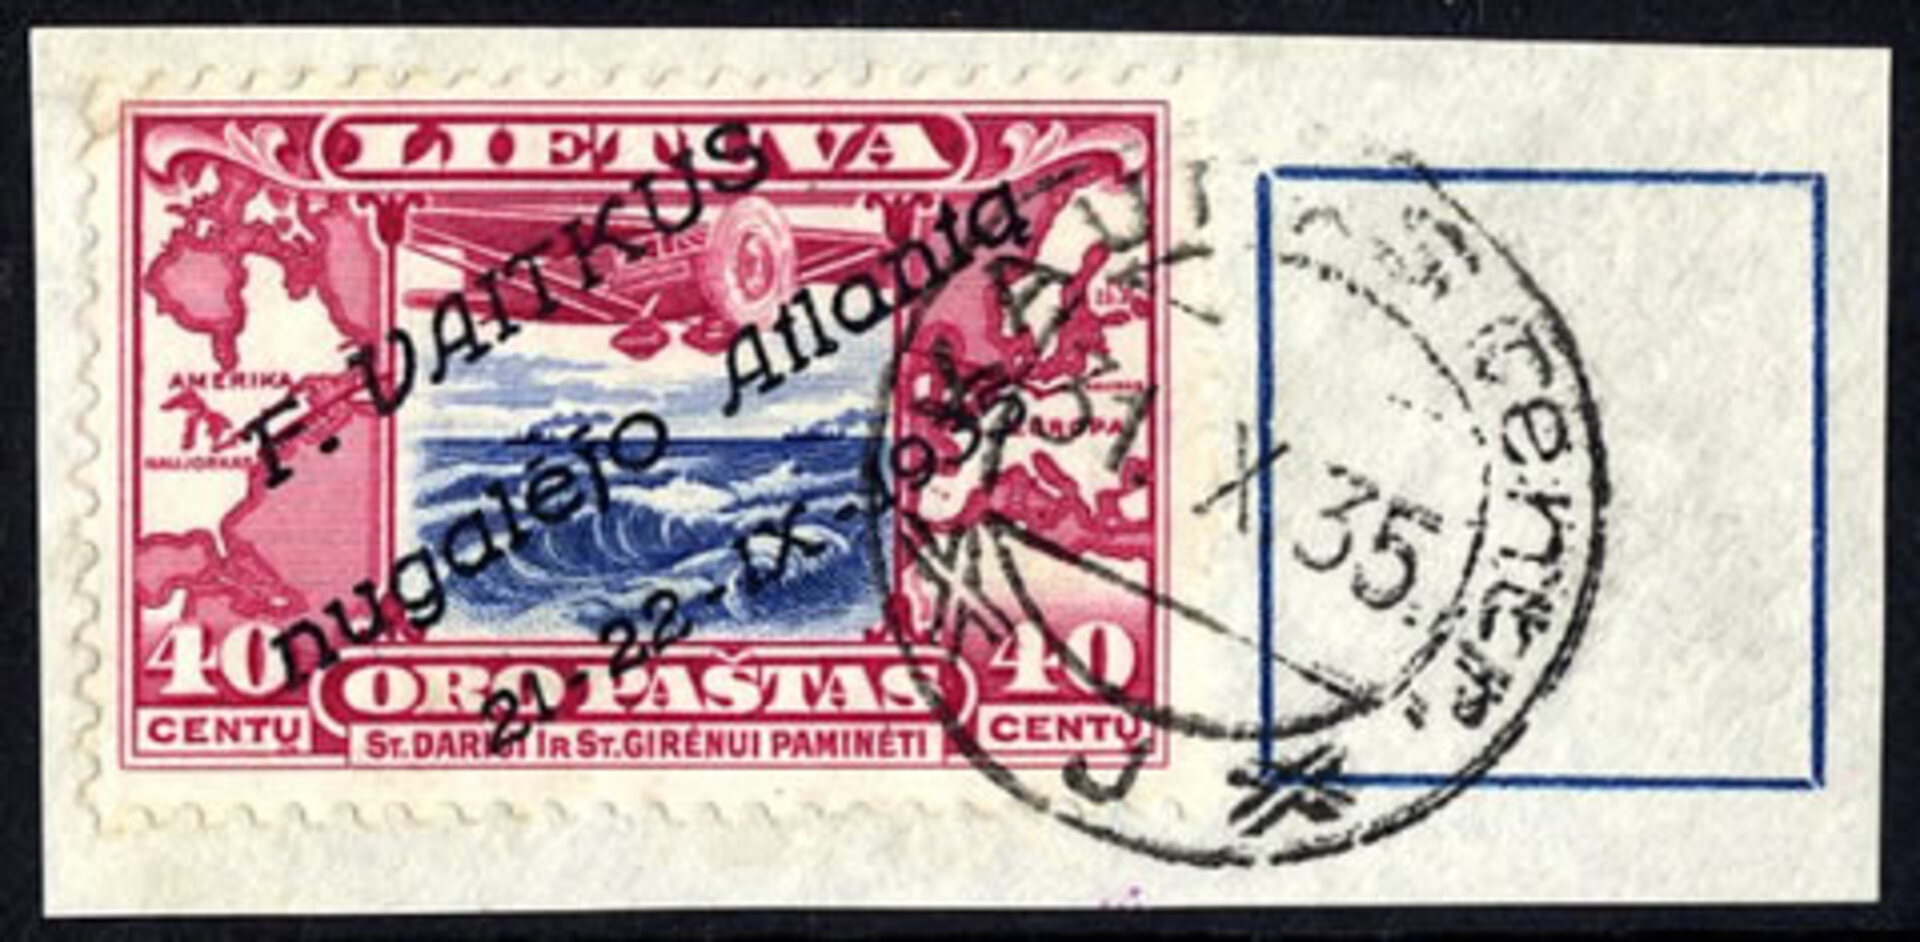 Felix Vaitkus and the Lituanica II Flight stamp